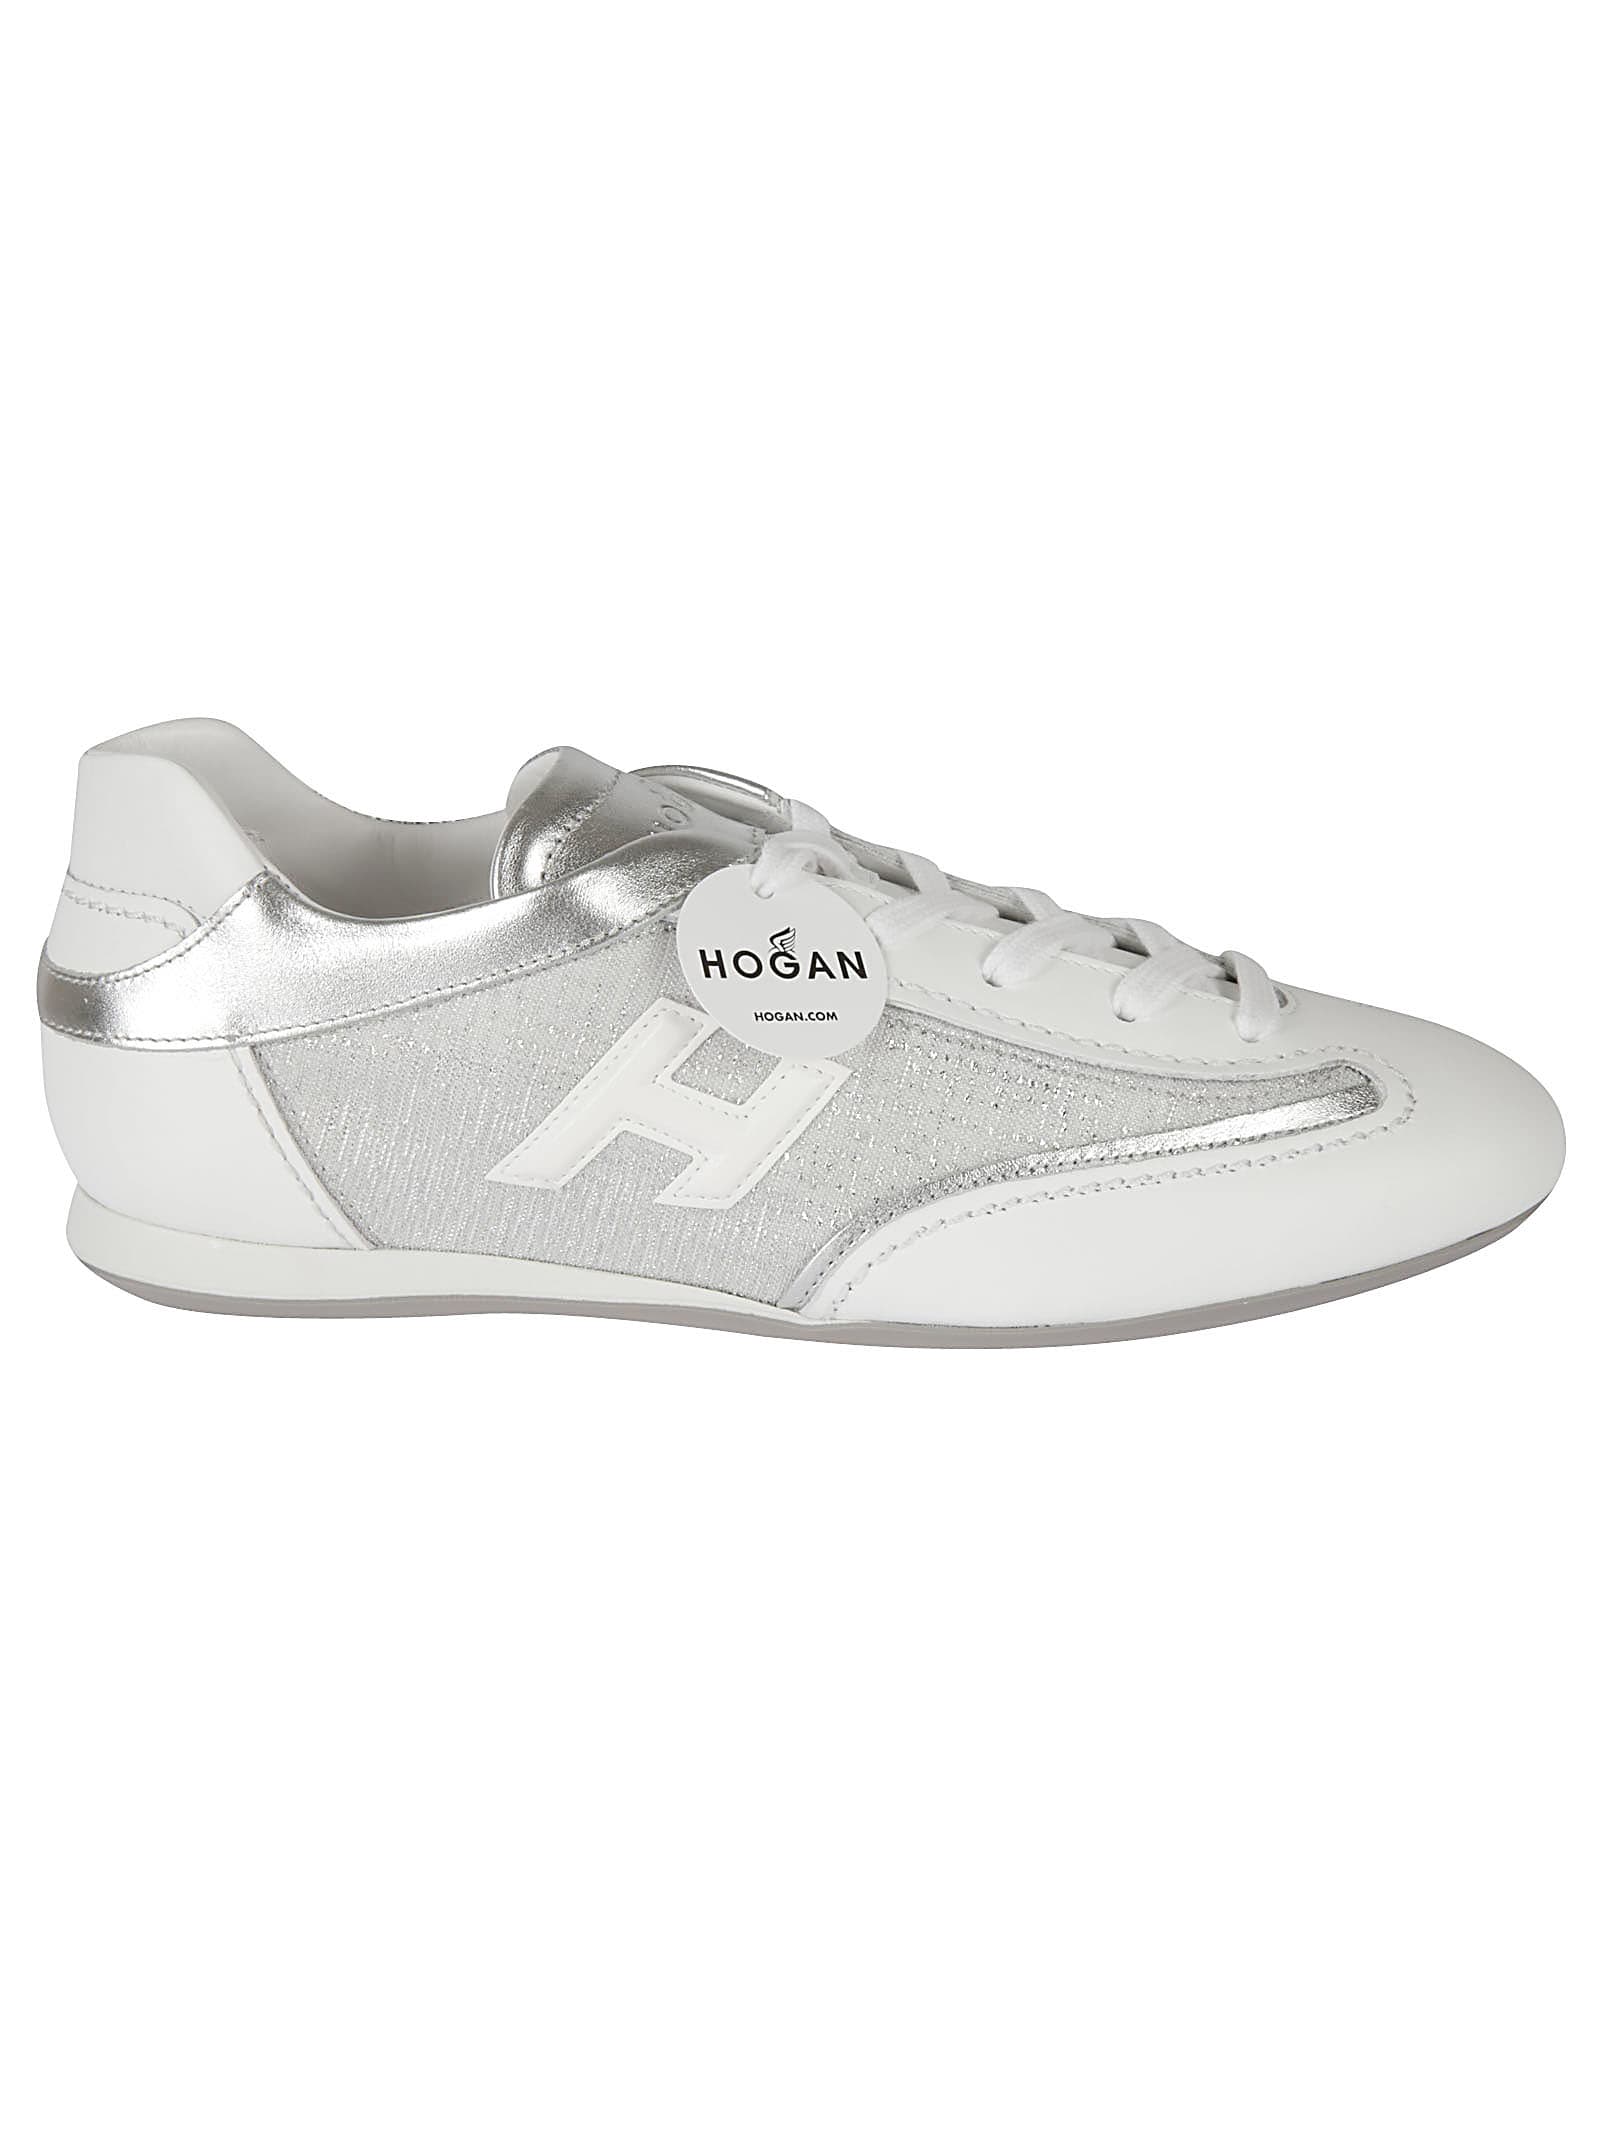 Hogan Olympia Sneakers In White | ModeSens